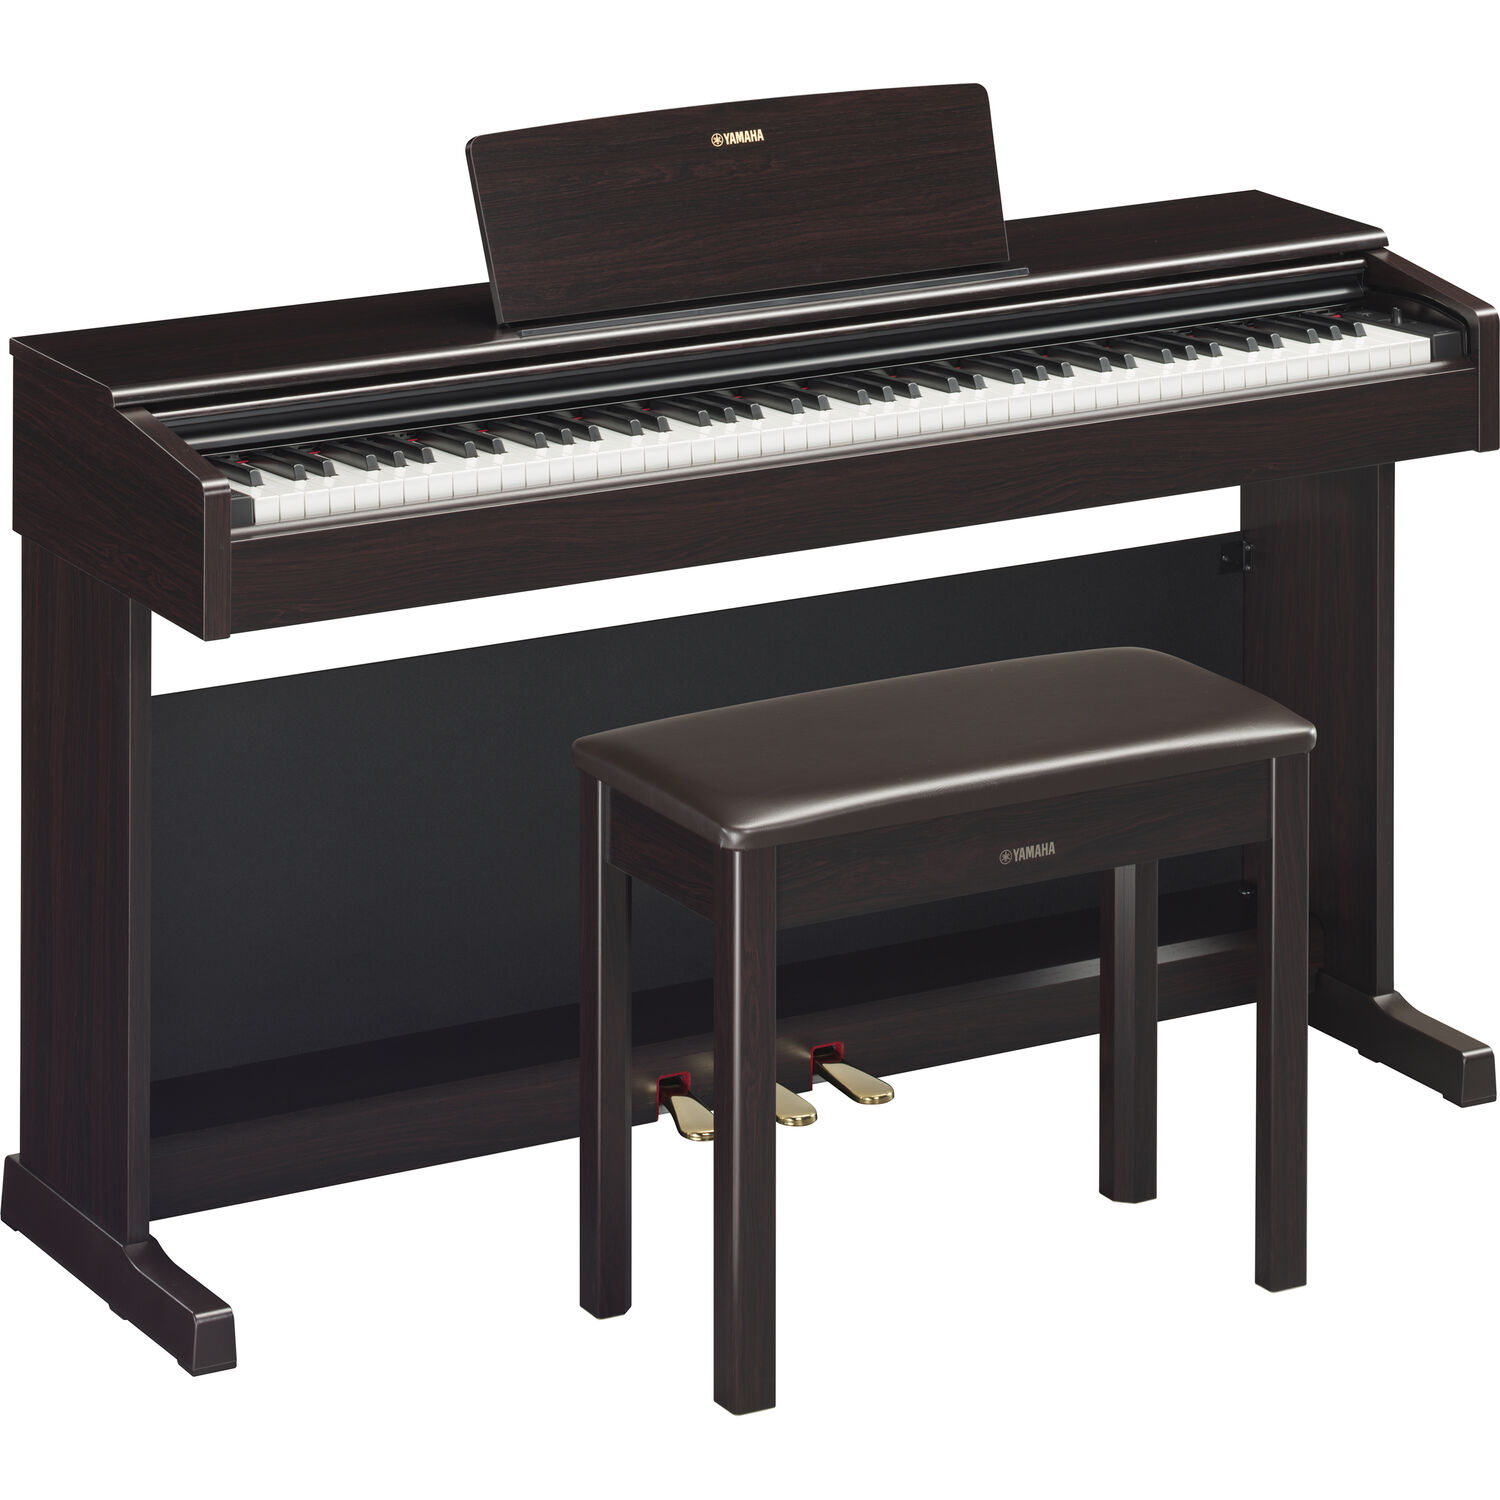 Piano Digital de Consola Yamaha Arius Ydp 145 de 88 Teclas con Banqueta Caoba Oscura